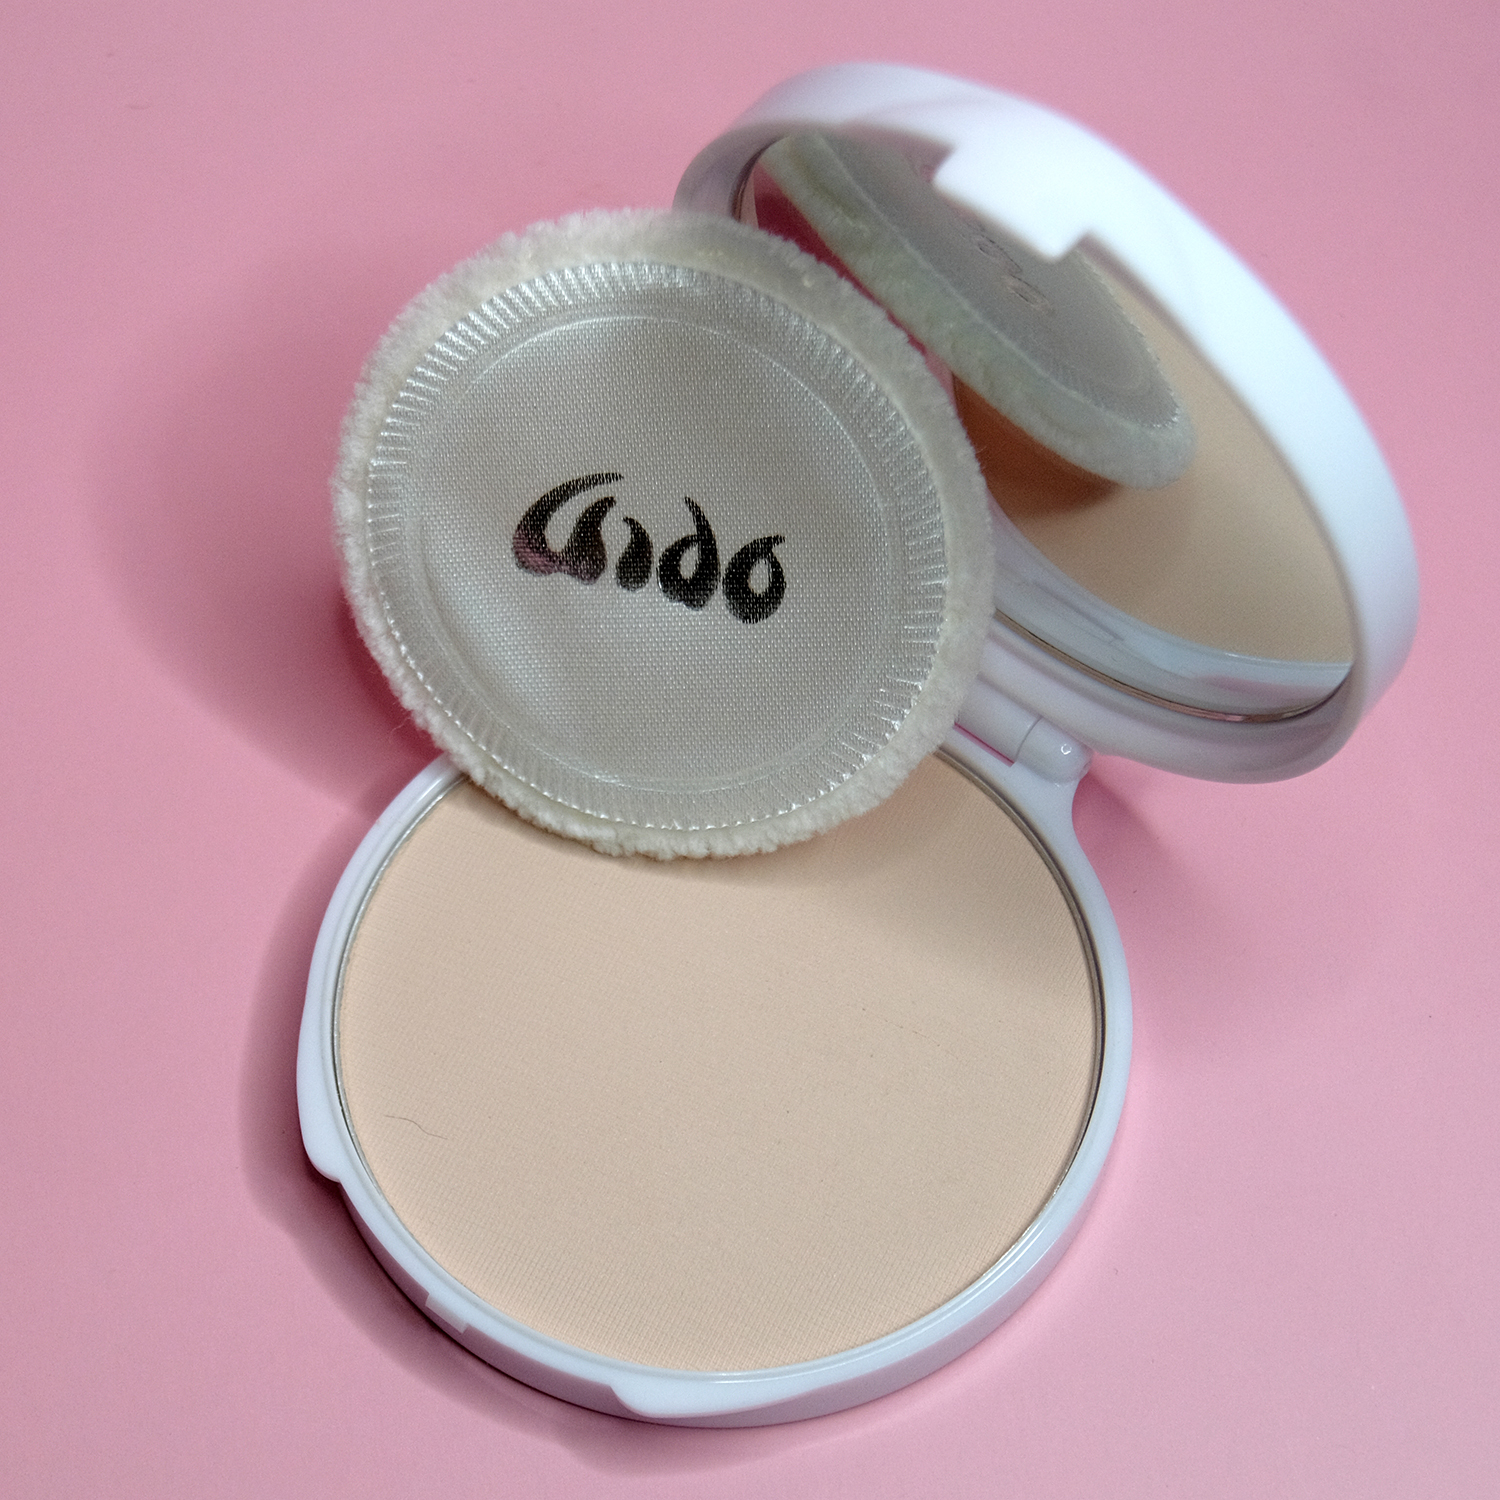 Aido Cream Powder, Super Affordable Shine-Control For The Practical